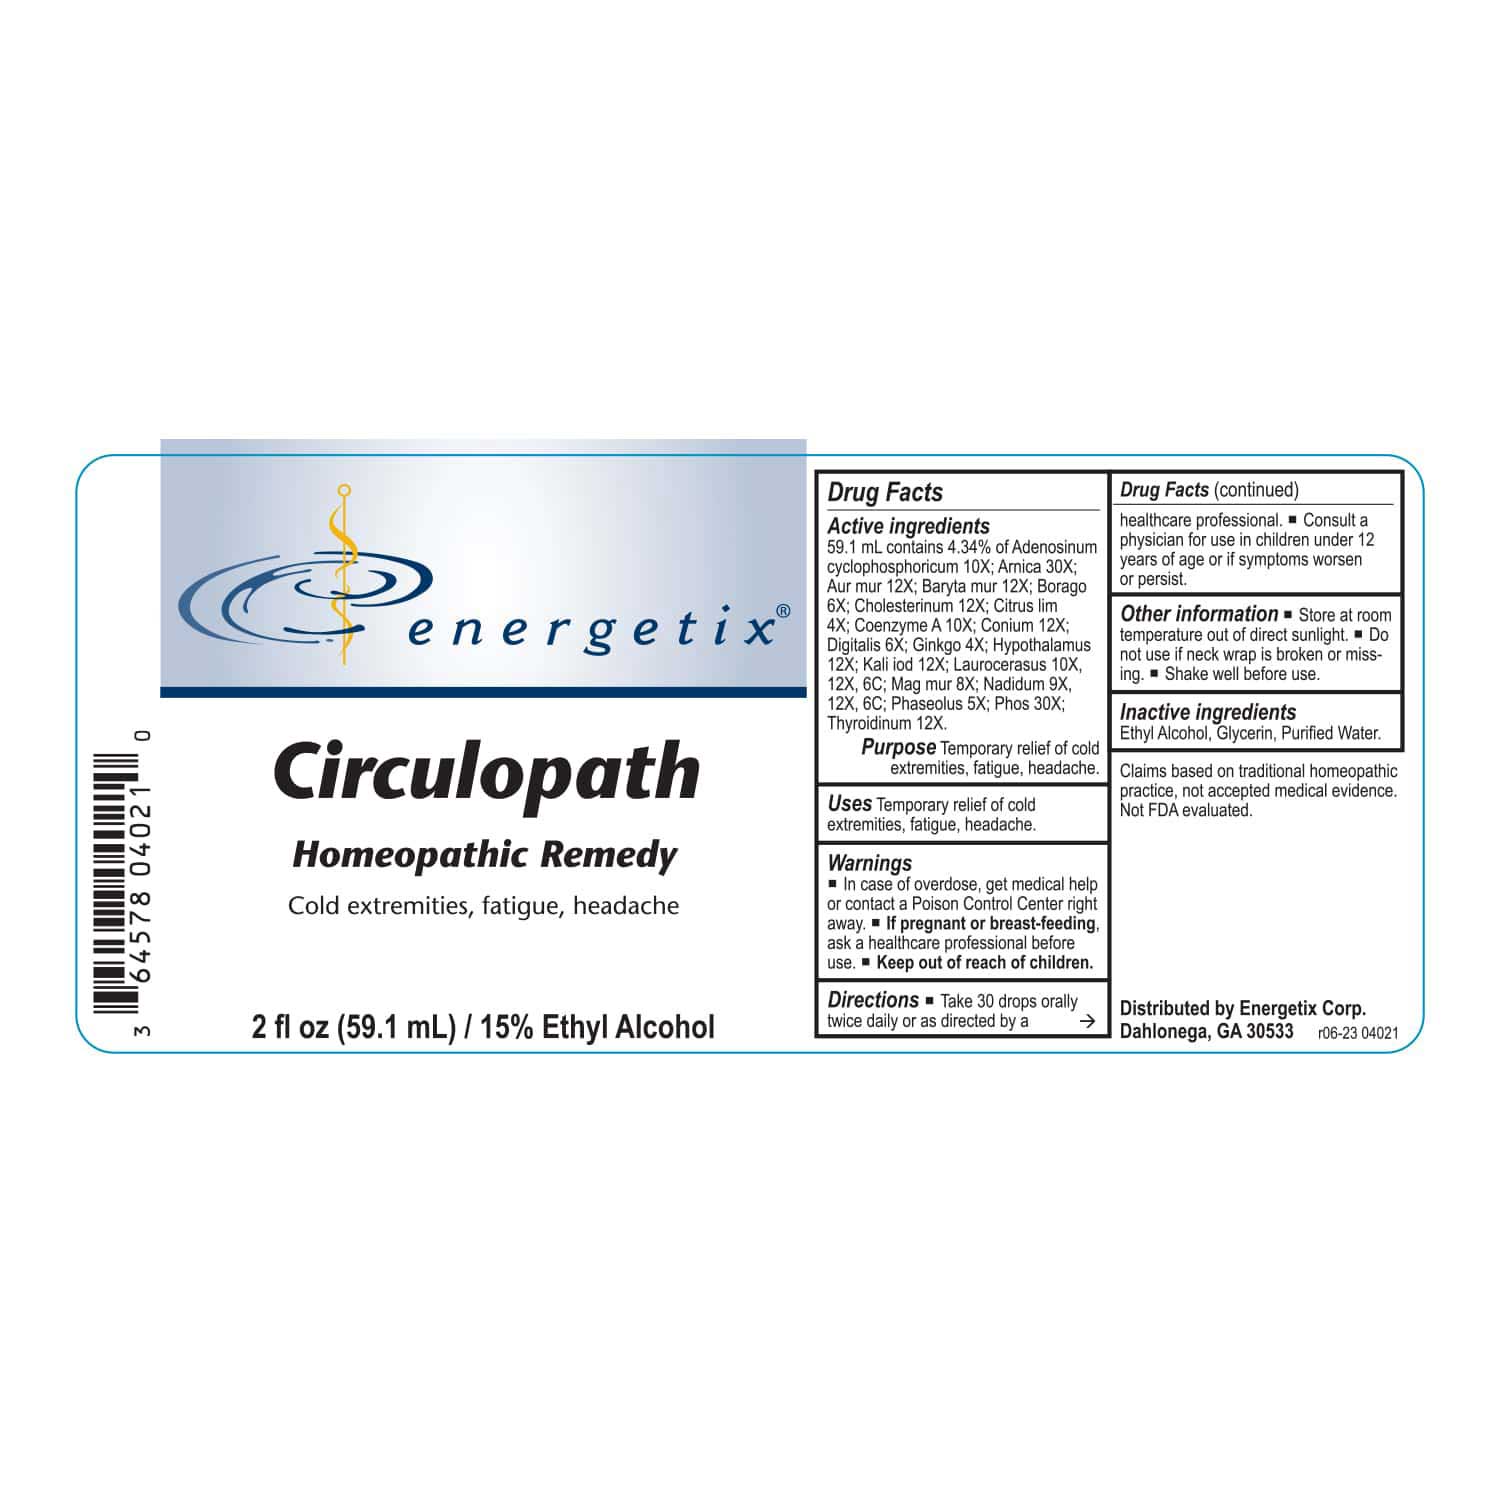 Energetix Circulopath Label